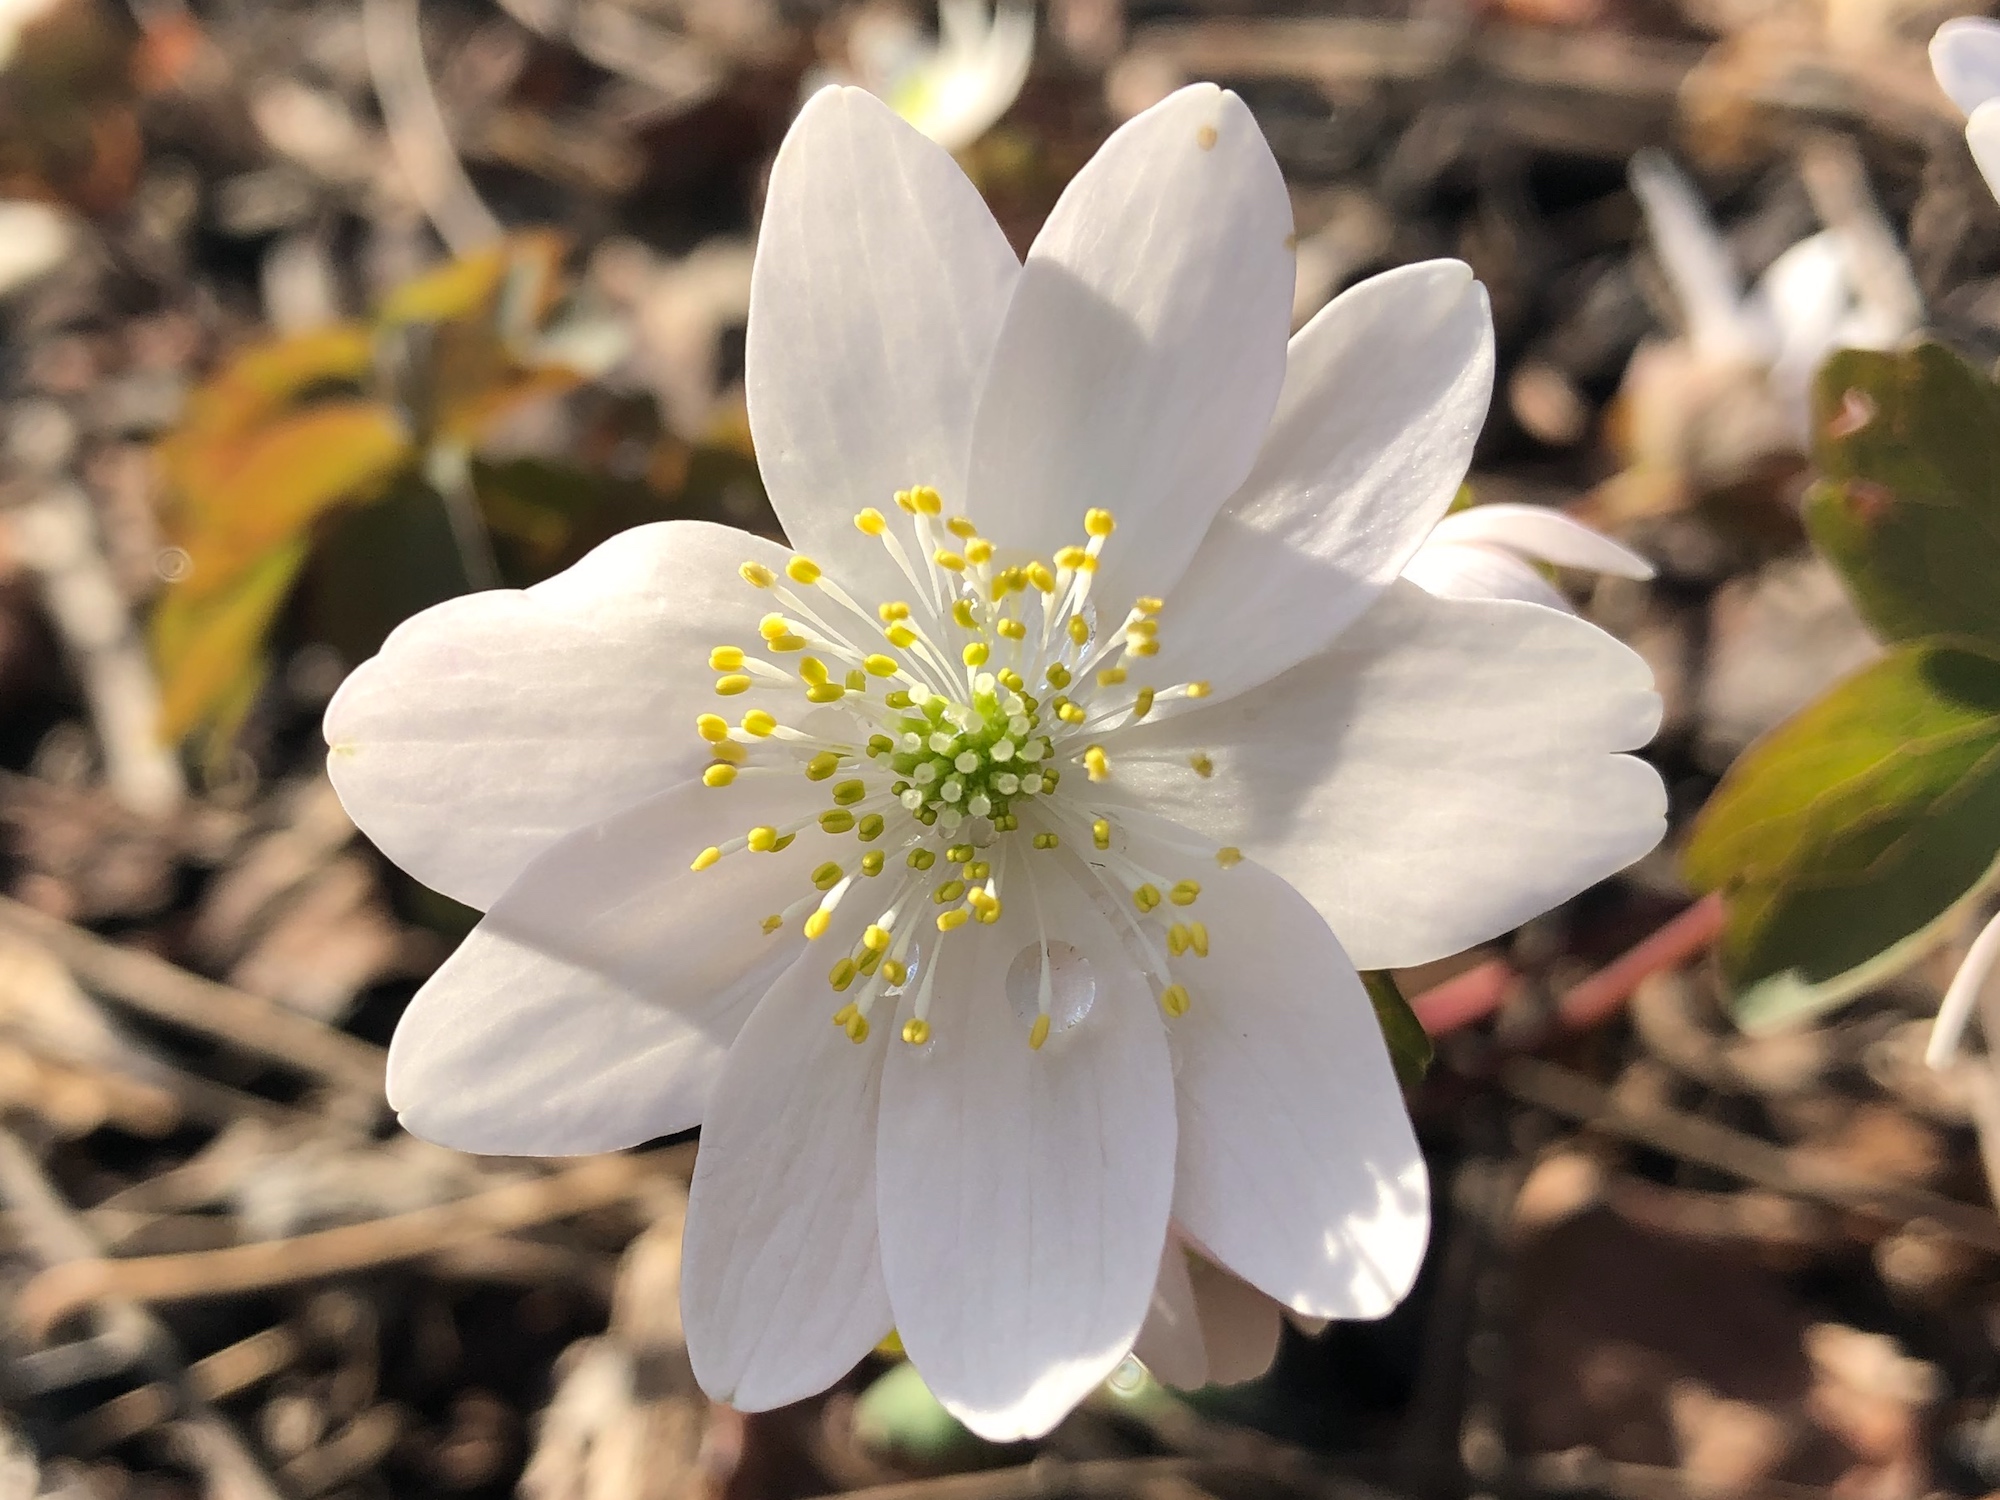 Rue-anemone near Agawa Path in Madison, Wisconsin on April 12, 2021.